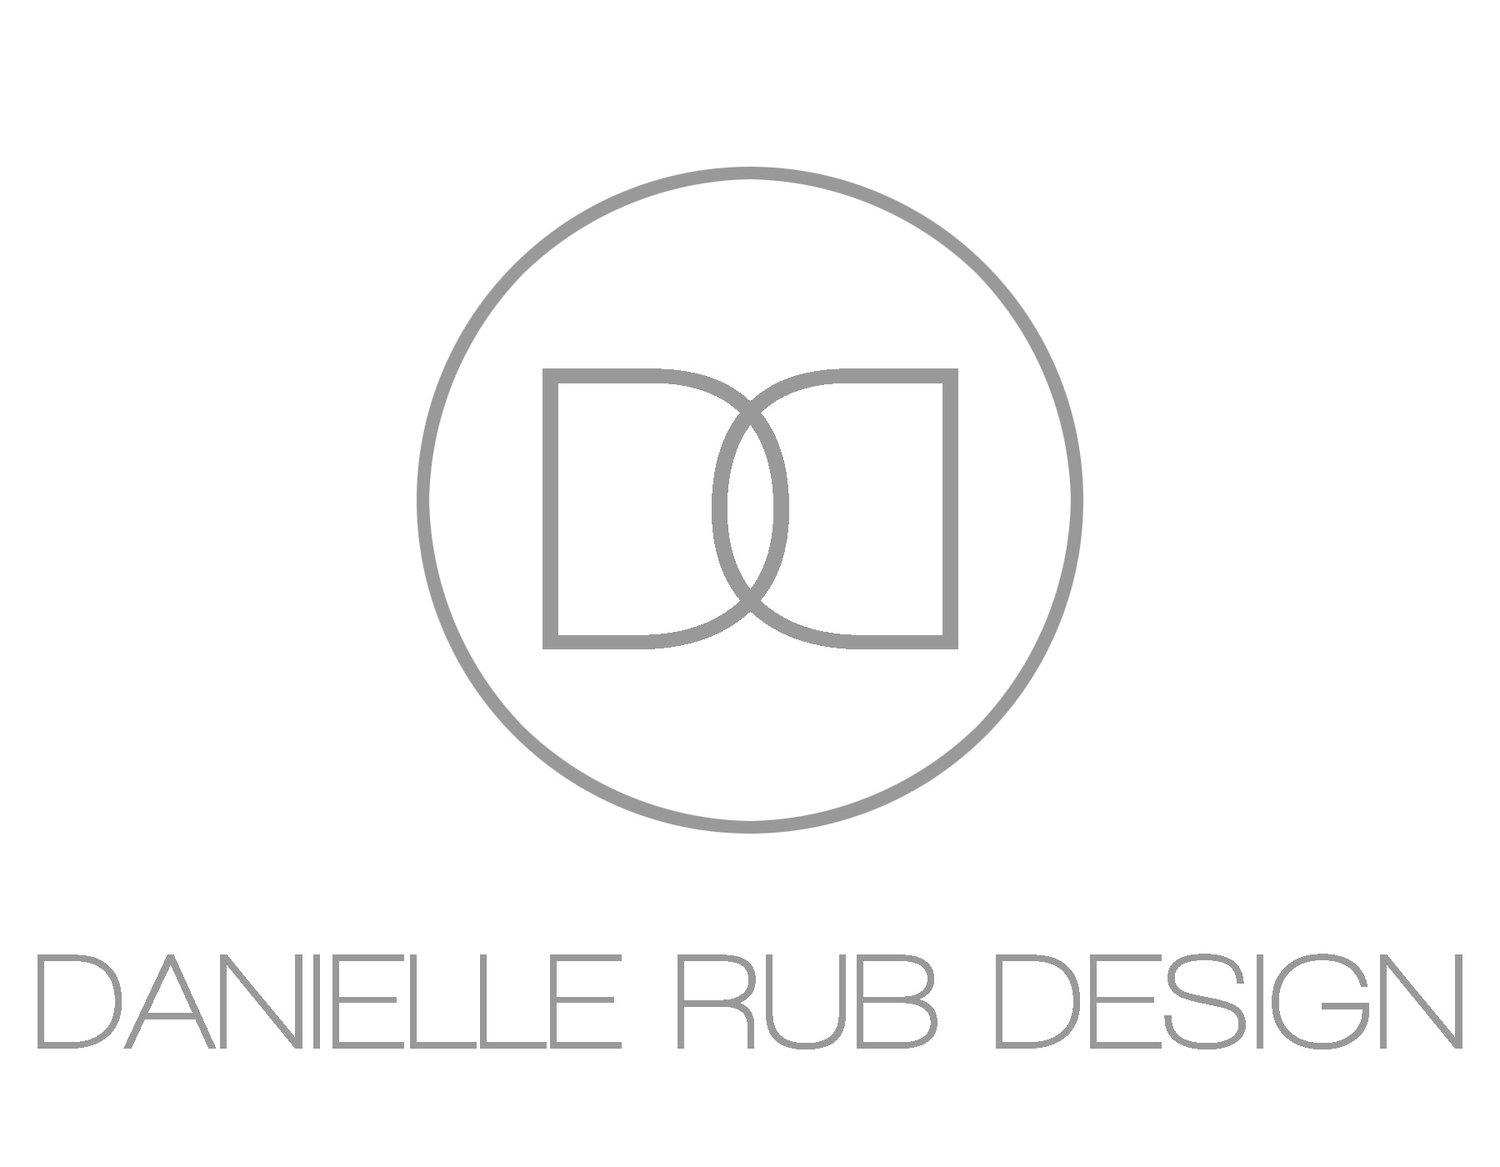 Danielle Rub Design